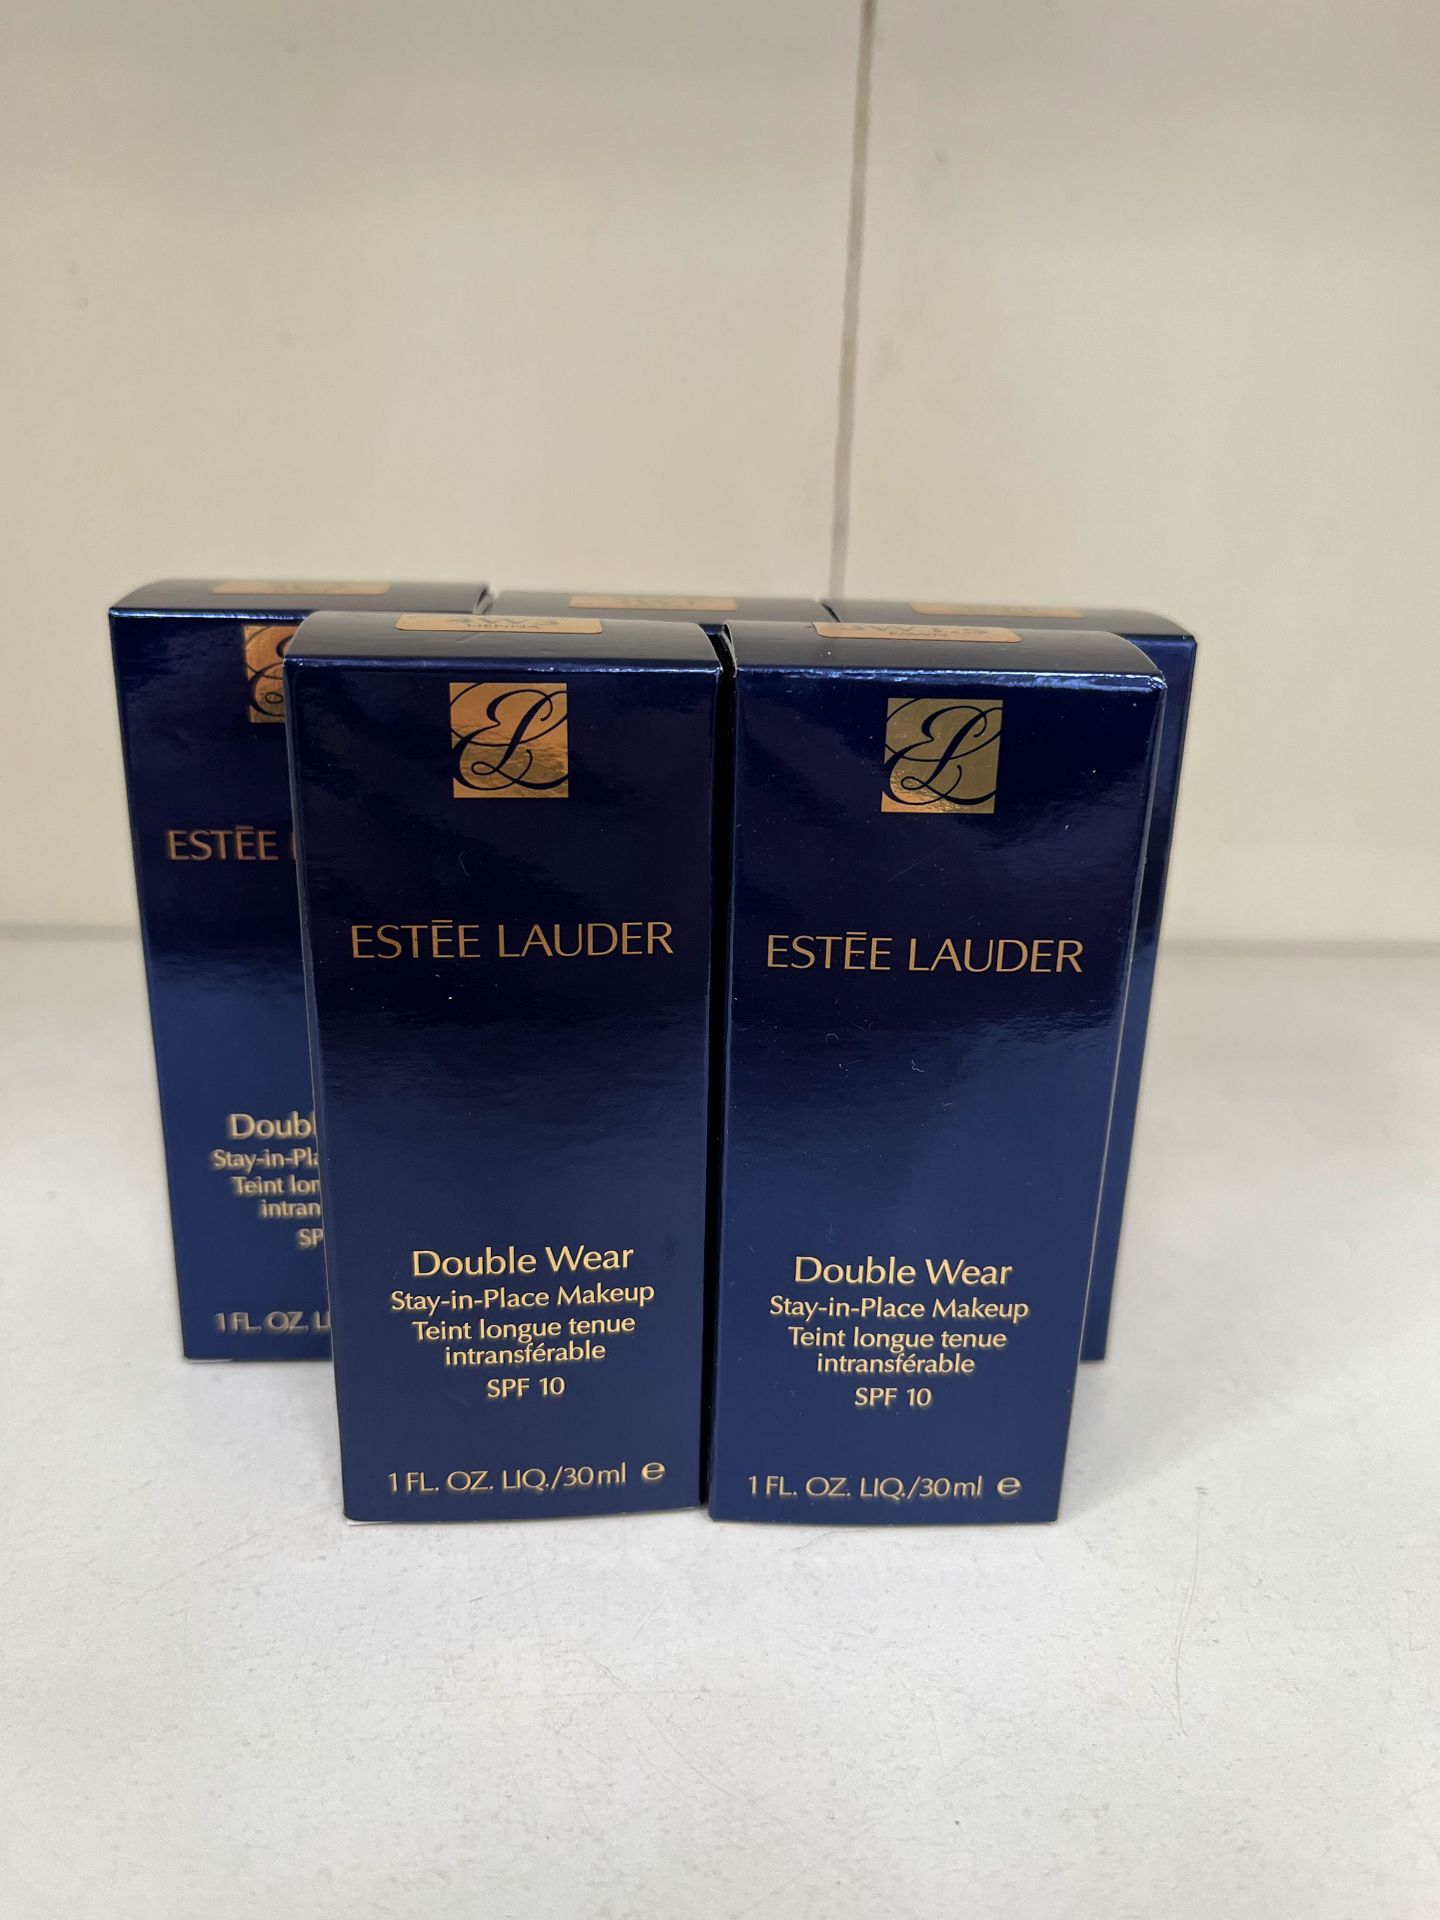 A Selection of Estée Lauder Make-Up Products